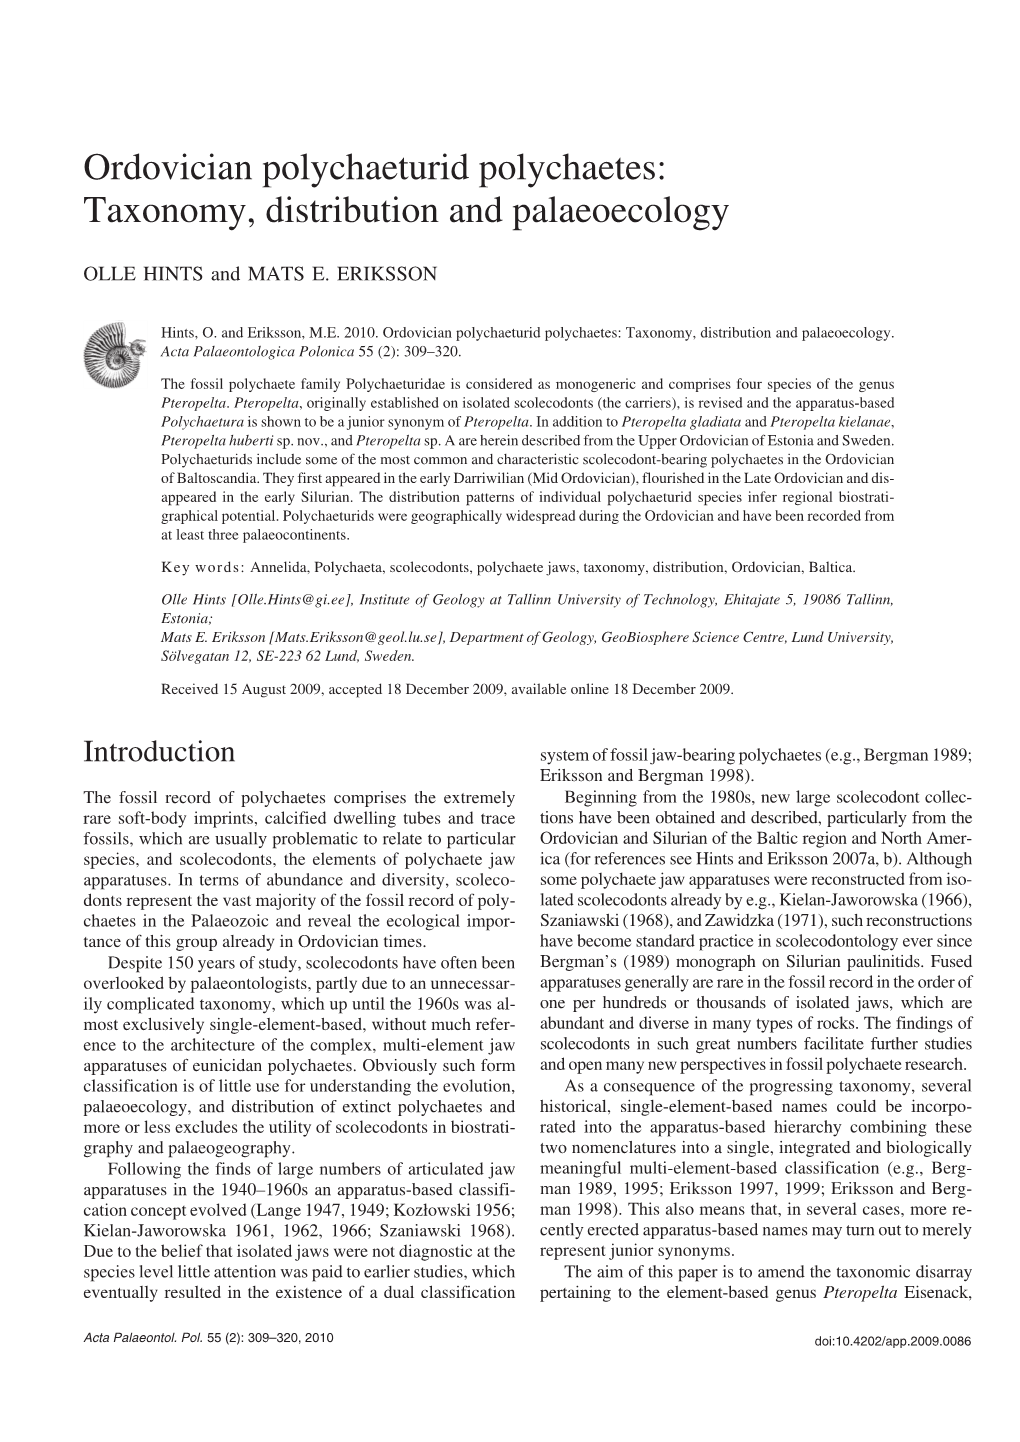 Ordovician Polychaeturid Polychaetes: Taxonomy, Distribution and Palaeoecology